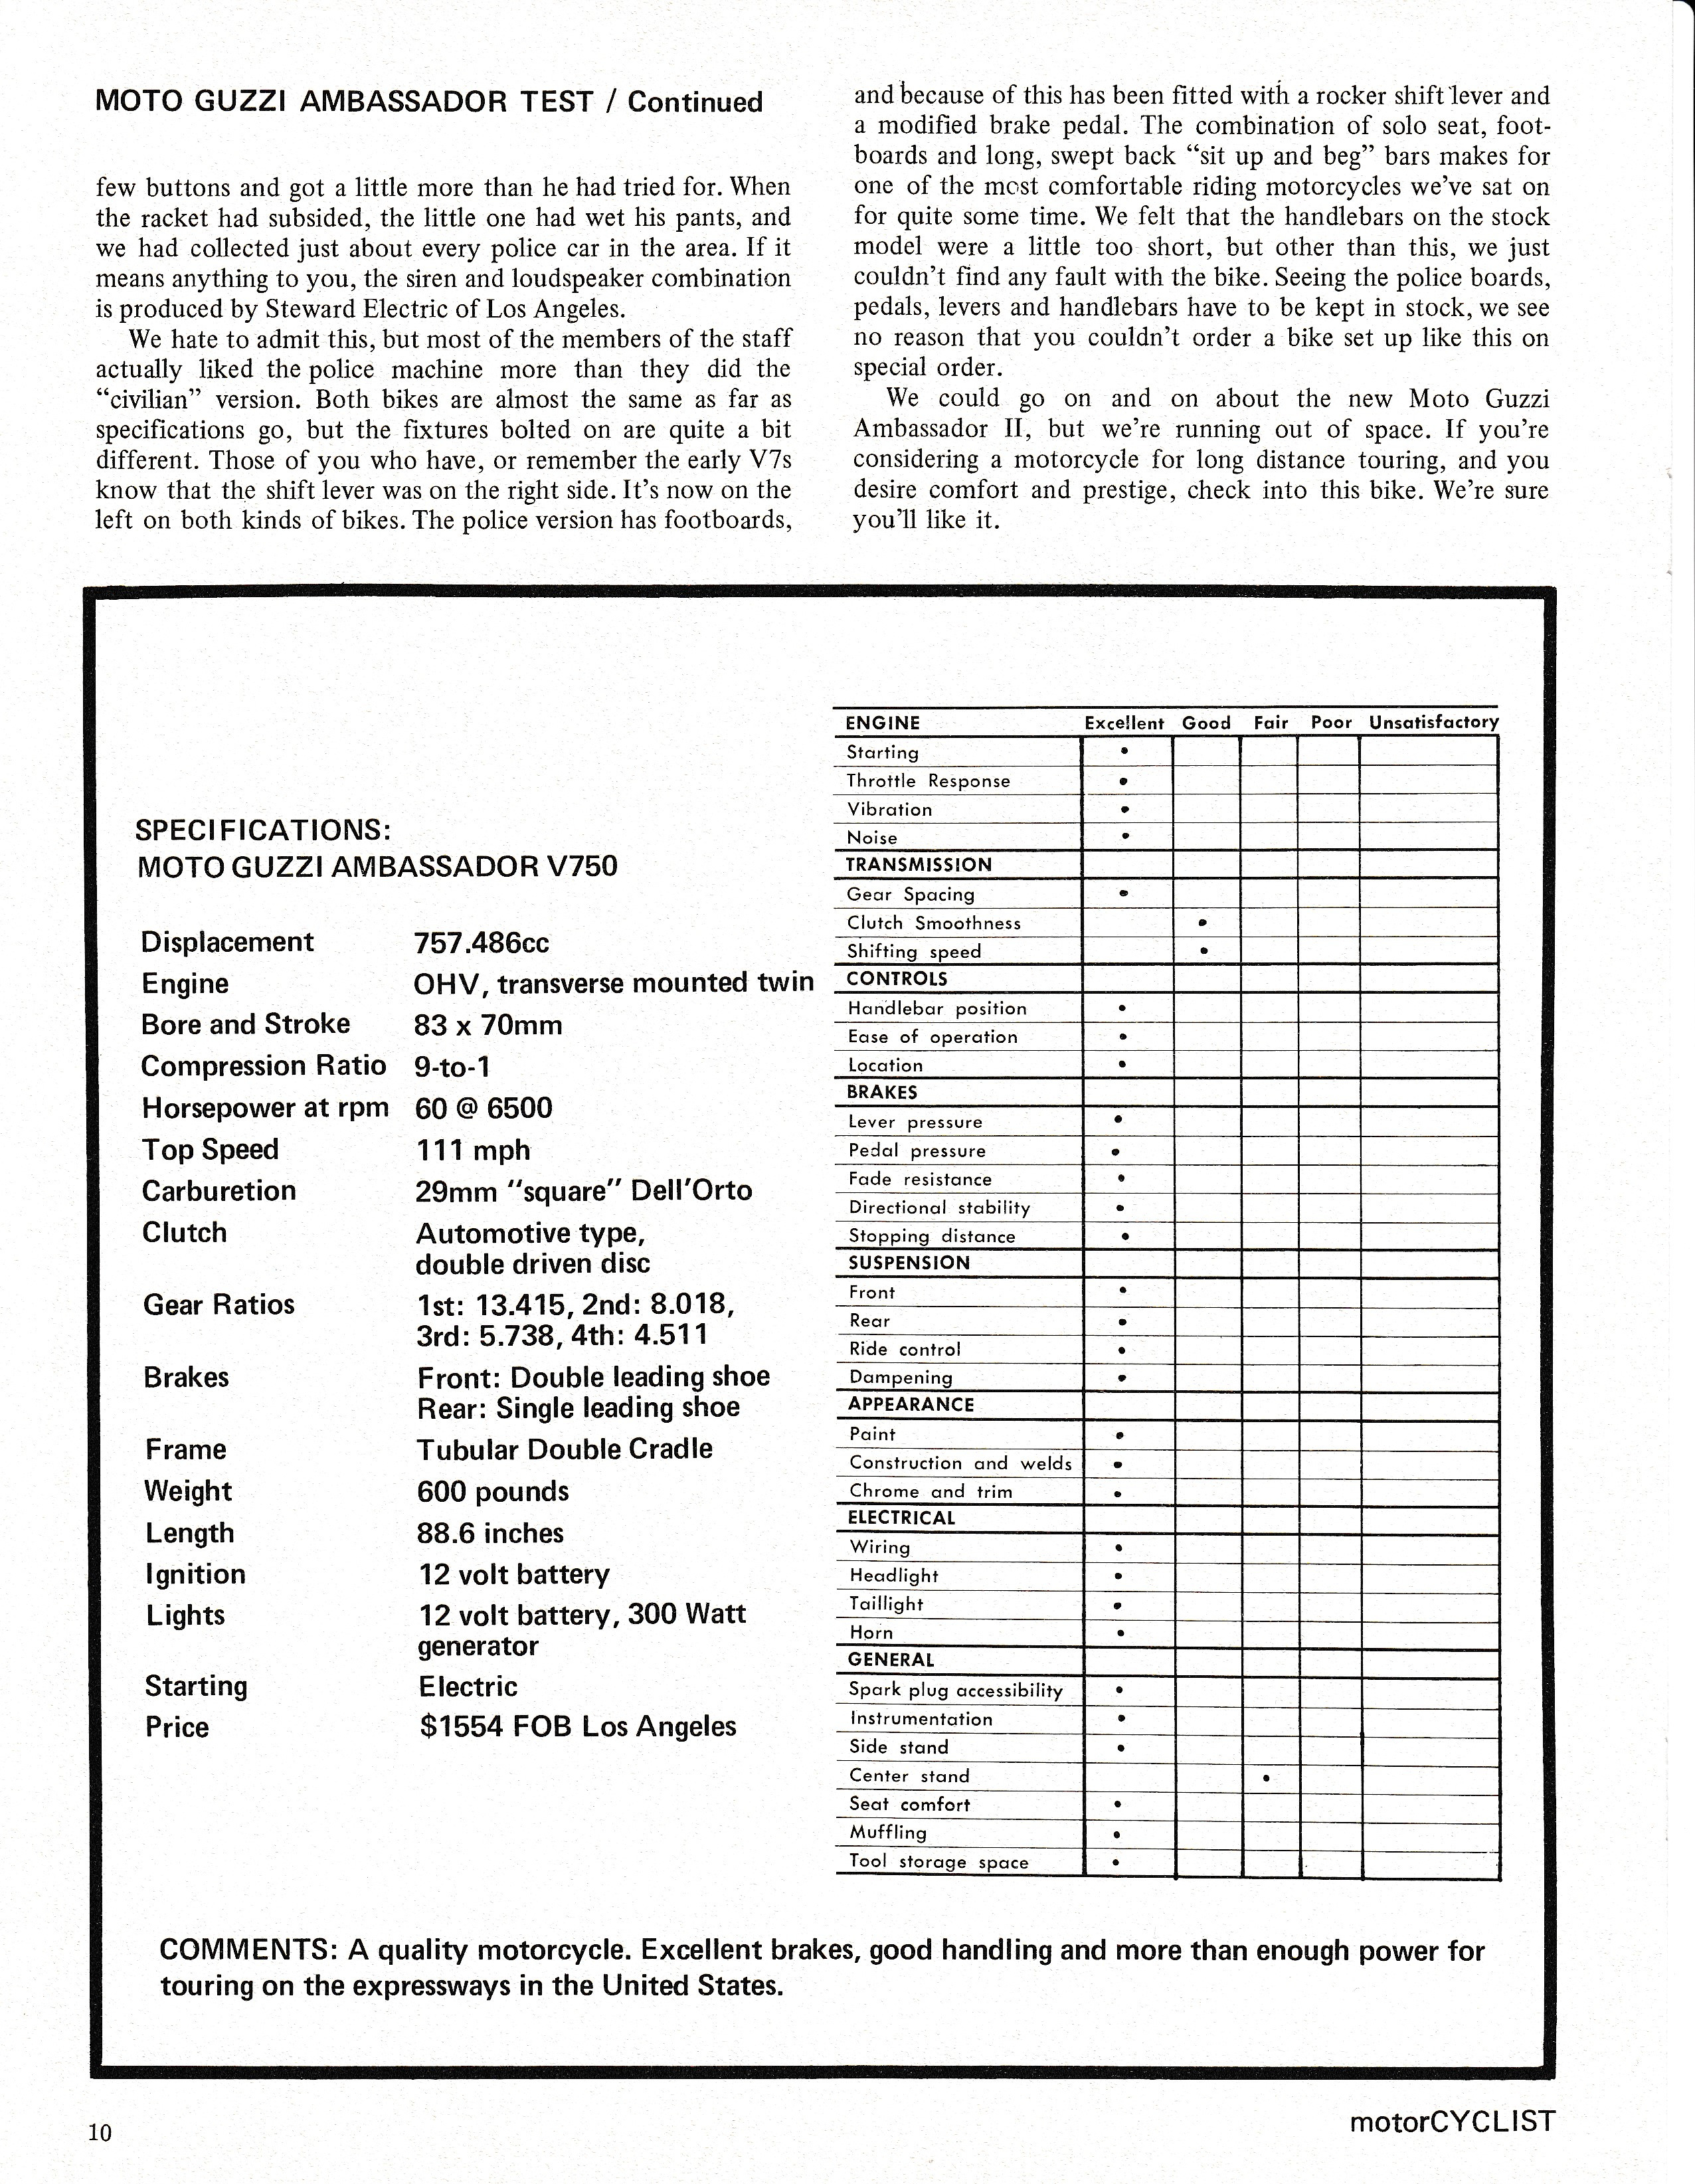 Moto Guzzi Ambassador factory brochure of magazine reviews, Page 10 of 16.